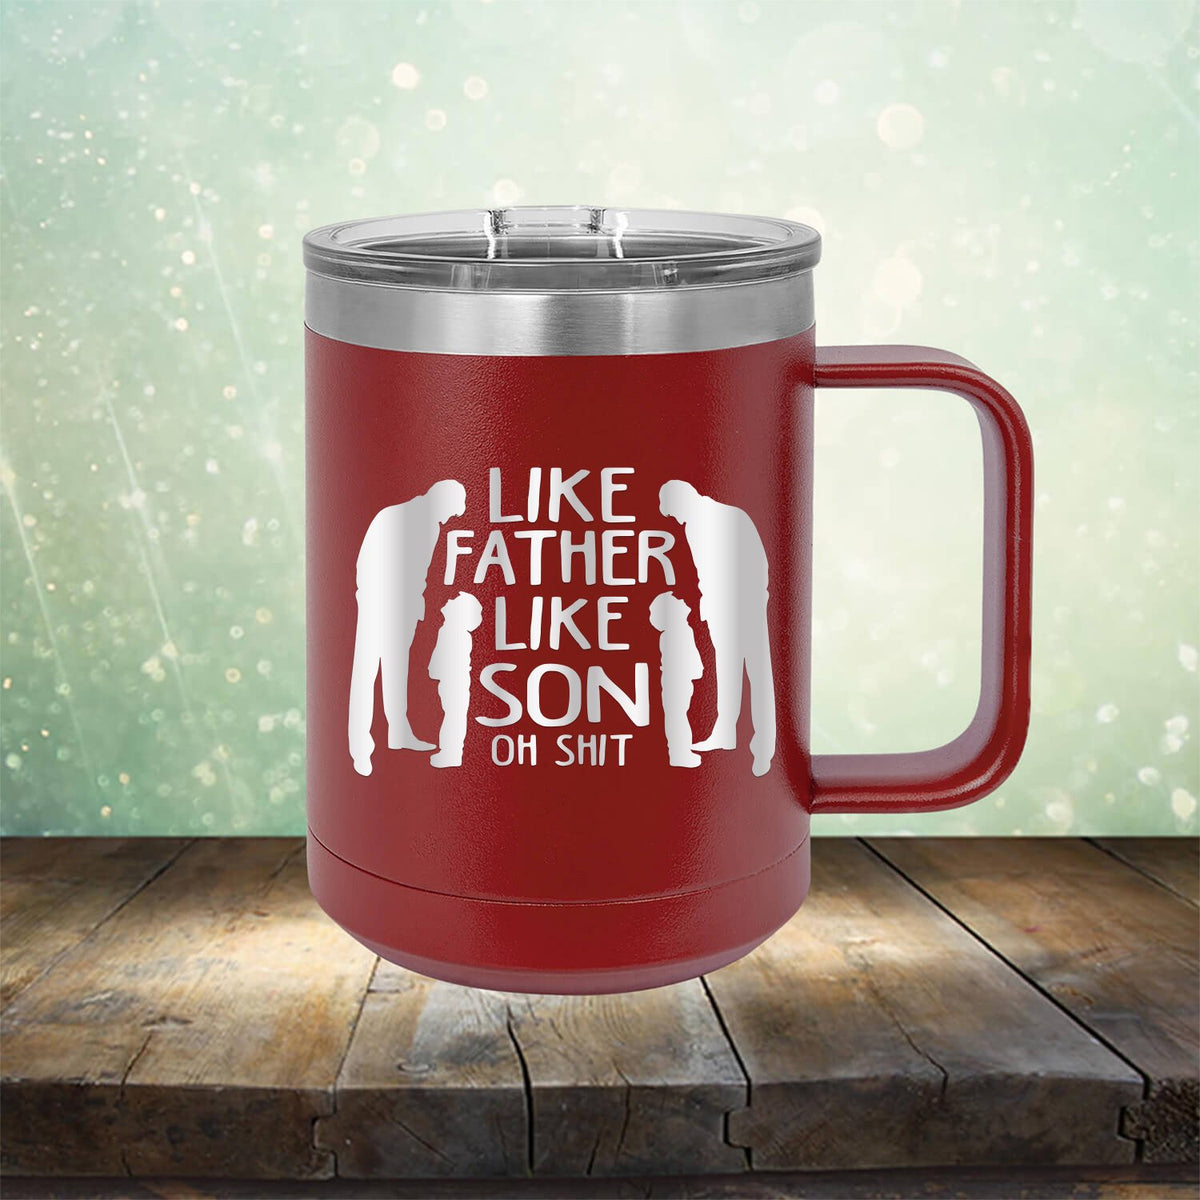 Like Father Like Son Oh Shit - Laser Etched Tumbler Mug